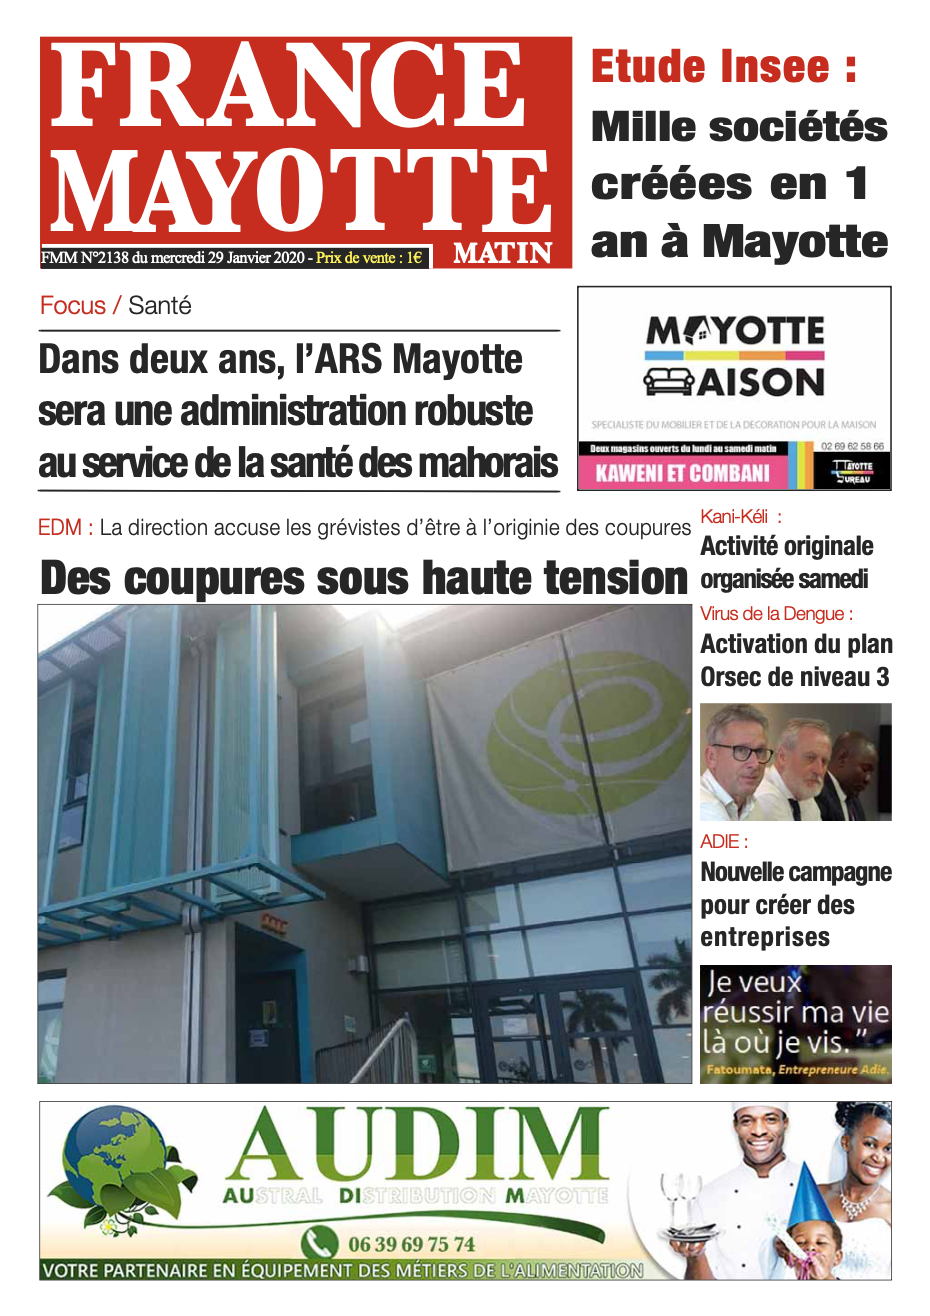 France Mayotte Mercredi 29 janvier 2020